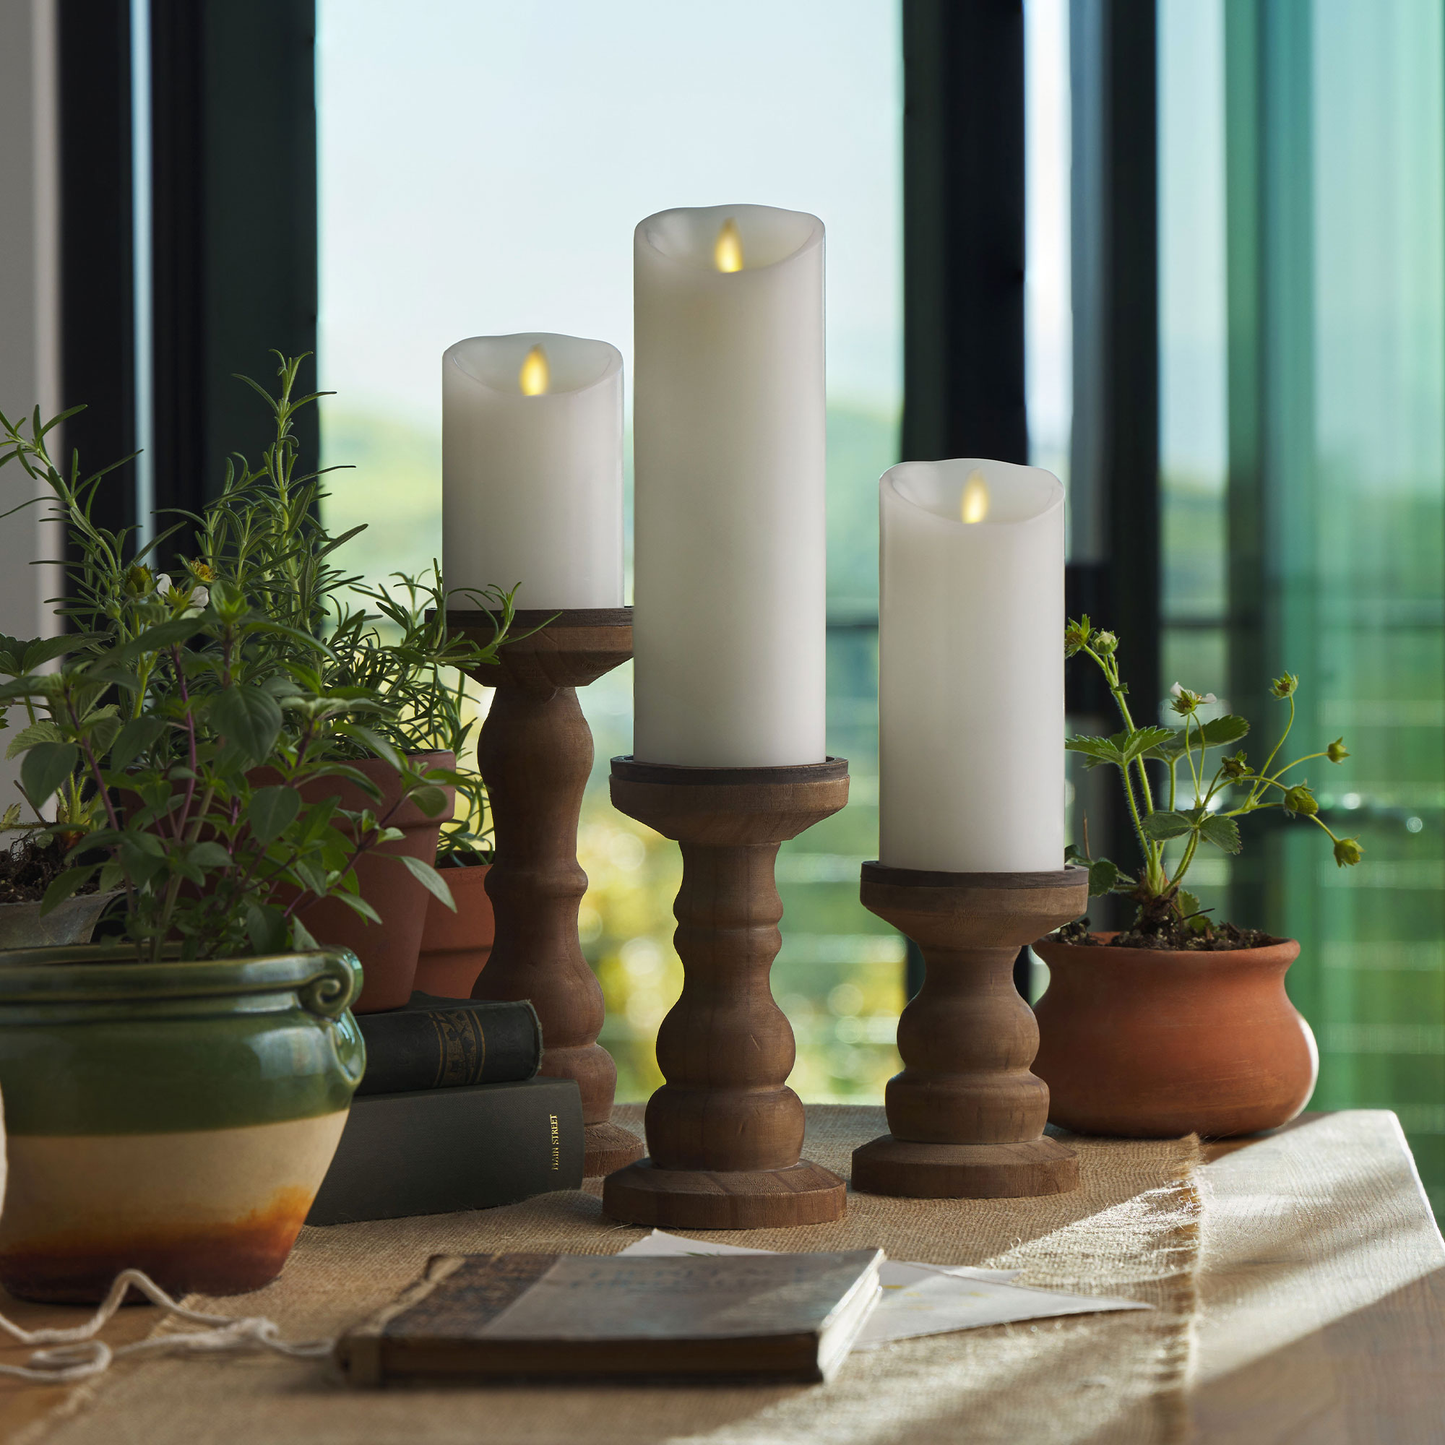 an image of Luminara's flameless white candles